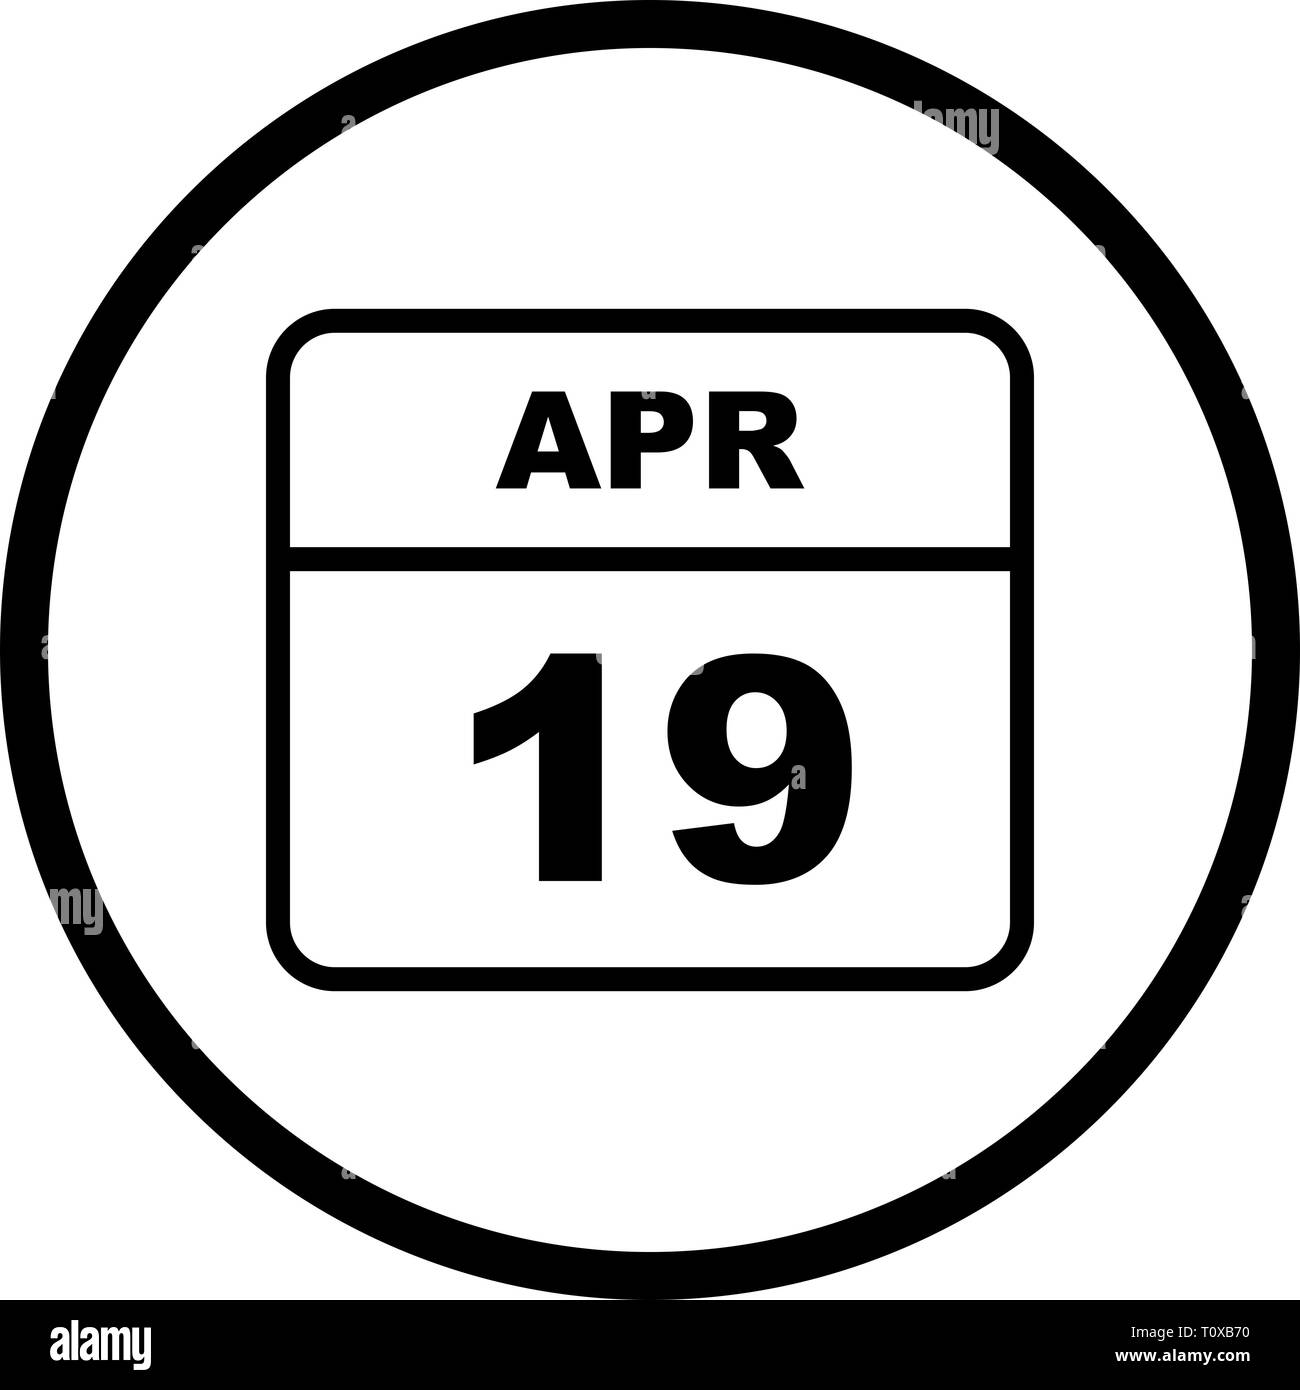 April 19th Date on a Single Day Calendar Stock Photo Alamy